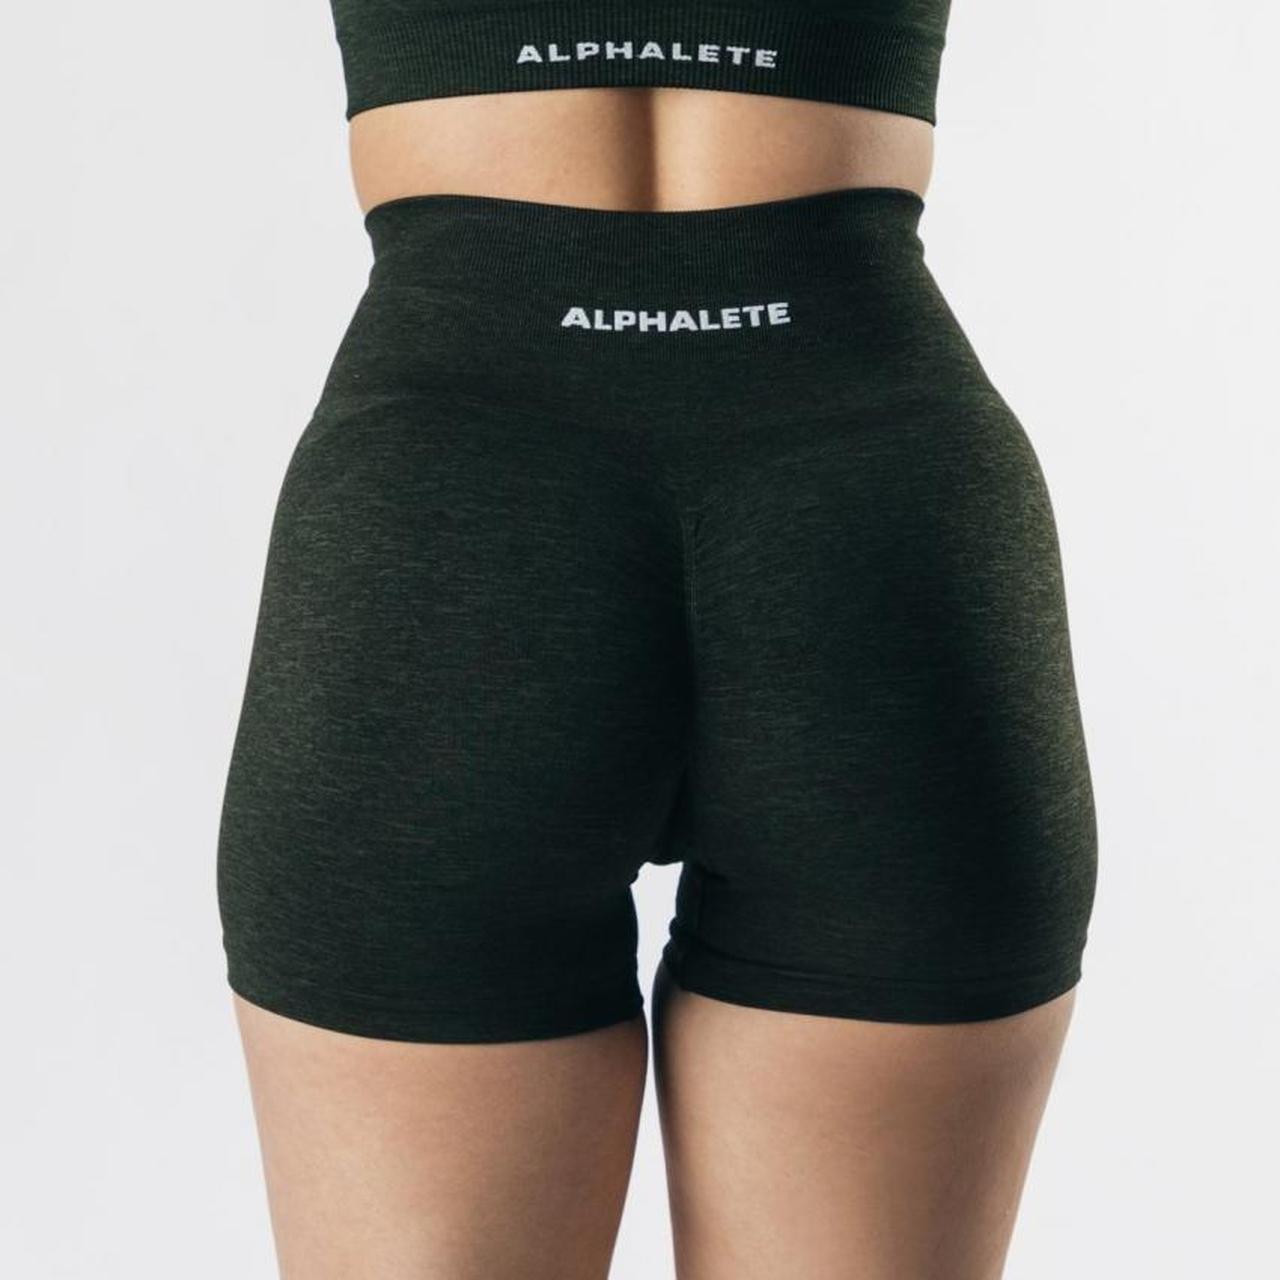 ALPHALETE amplify 4.5 in shorts in CHOCOLATE 🍫  - Depop